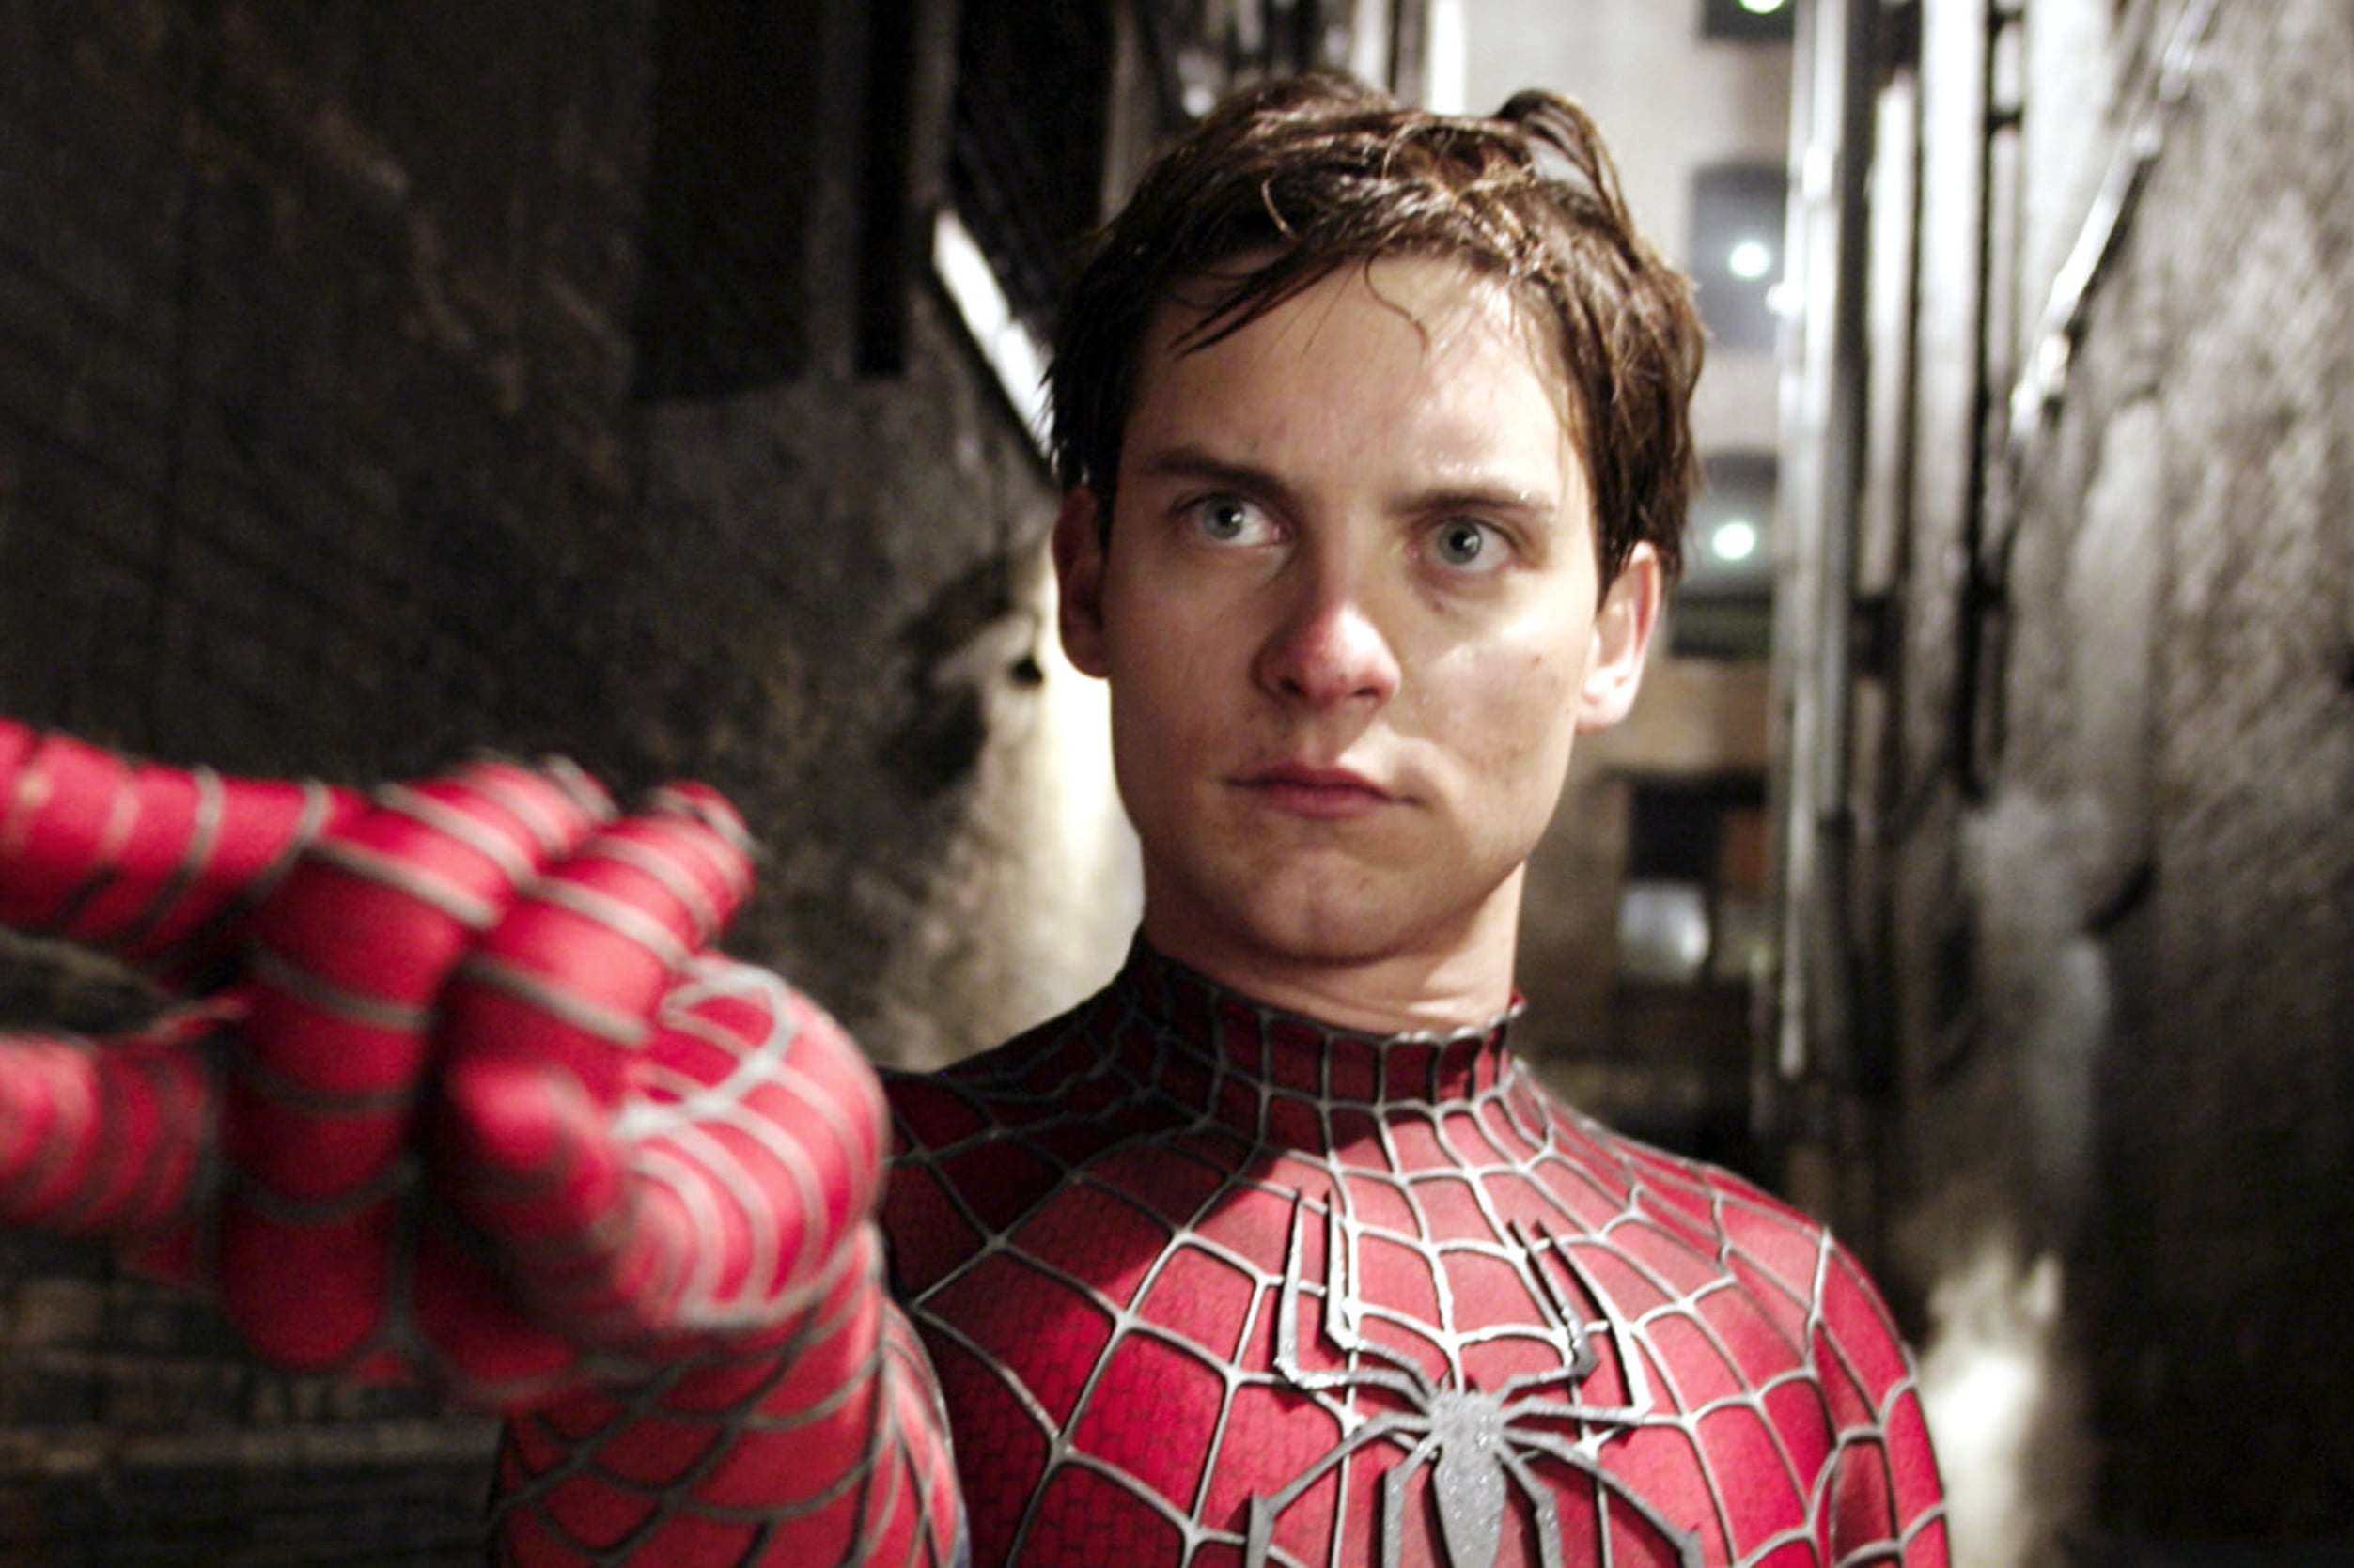  Men's Marvel Spider-Man: No Way Home Spinning Webs